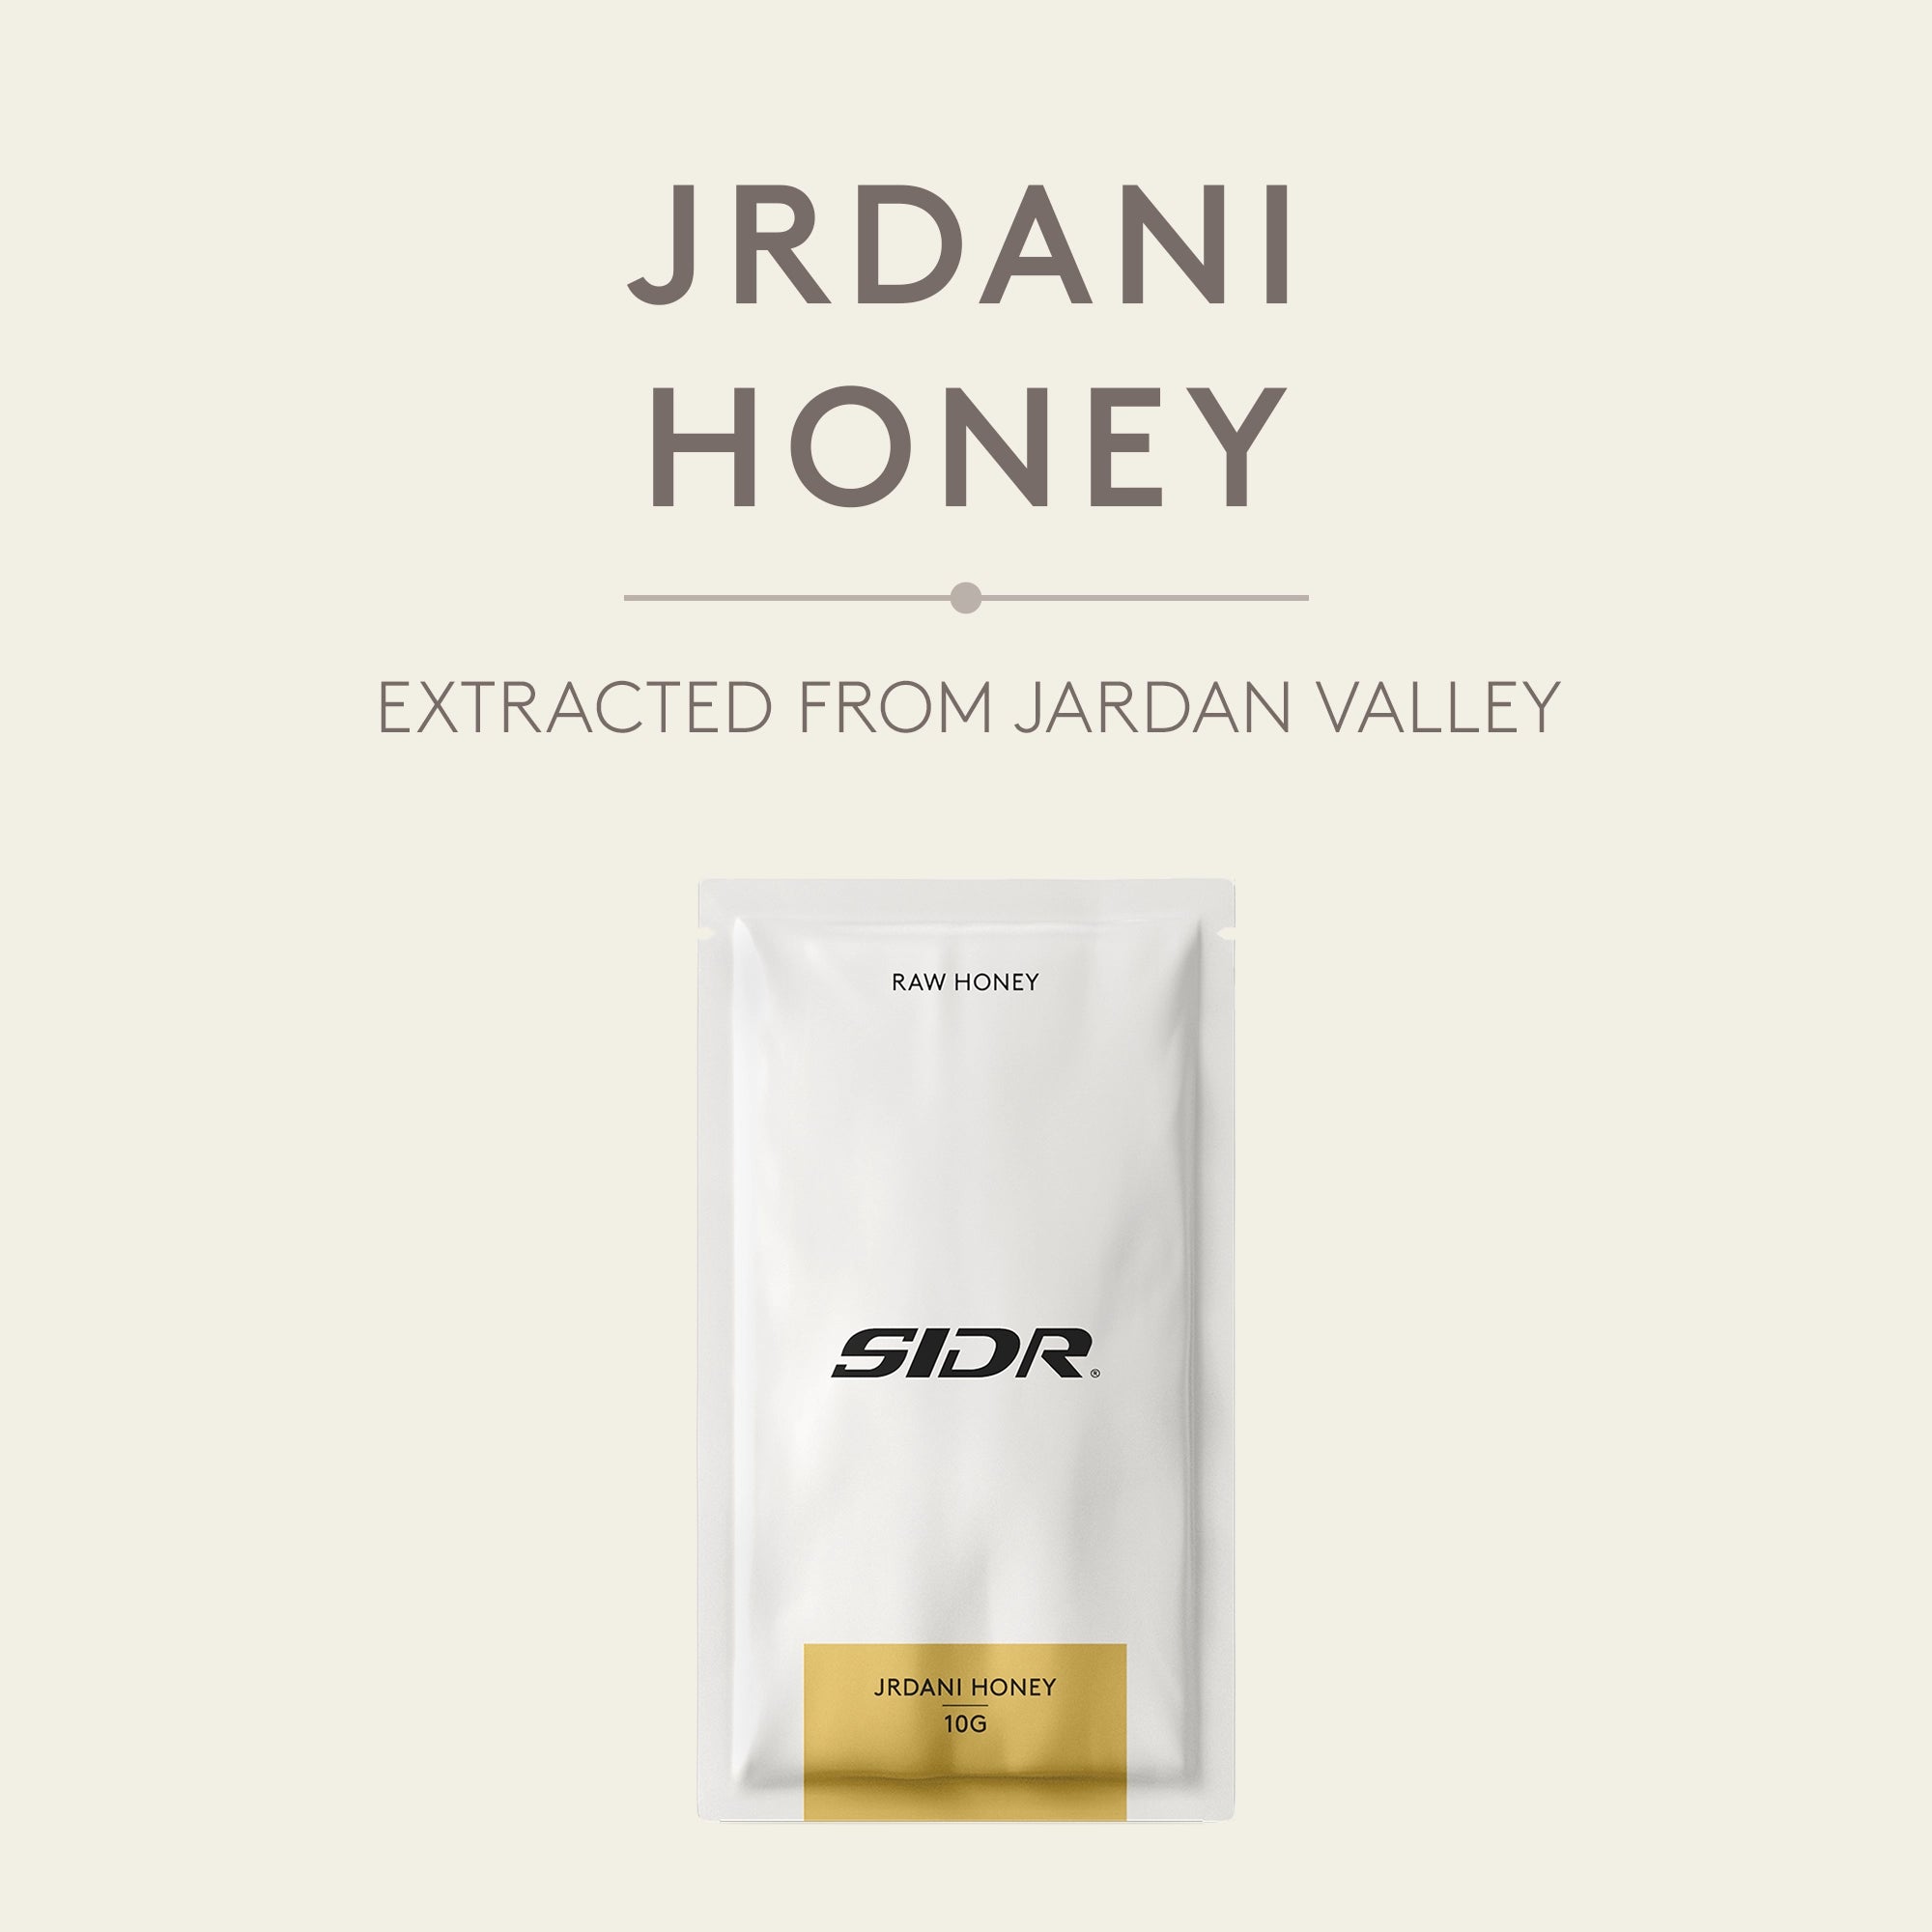 sidr jrdani honey packet from jardan valley